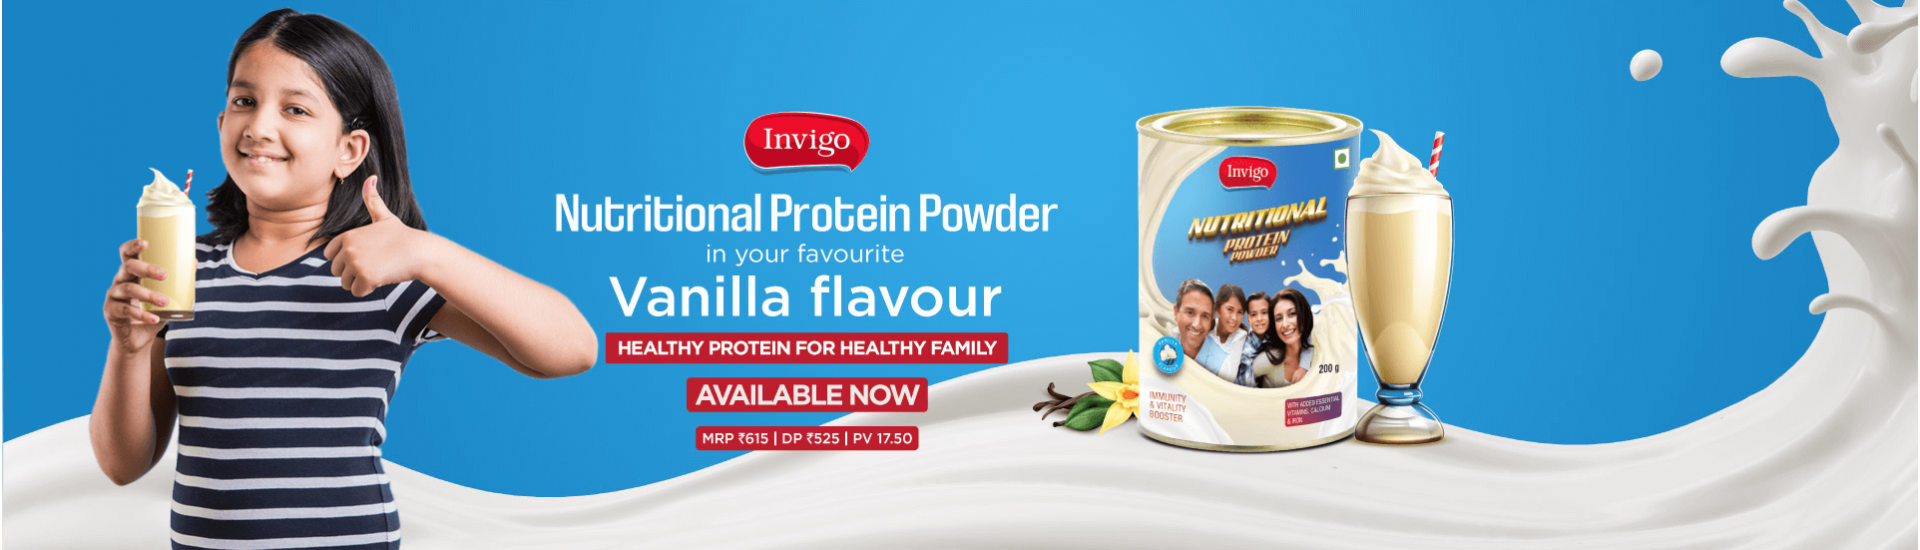 Vestige Invigo Nutritional Protein Powder - Vanilla